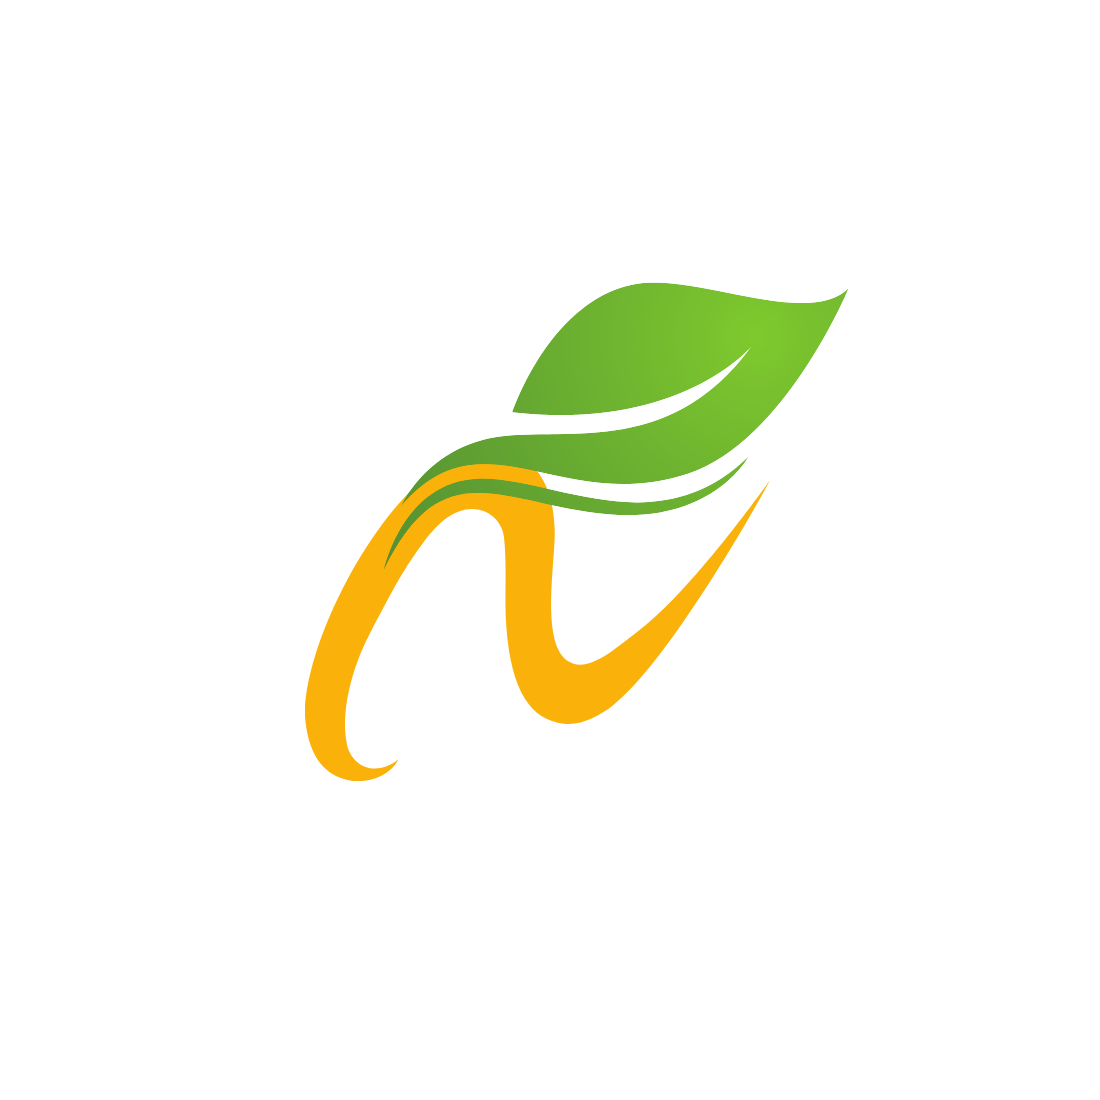 Financial Services Logo Design cover image.